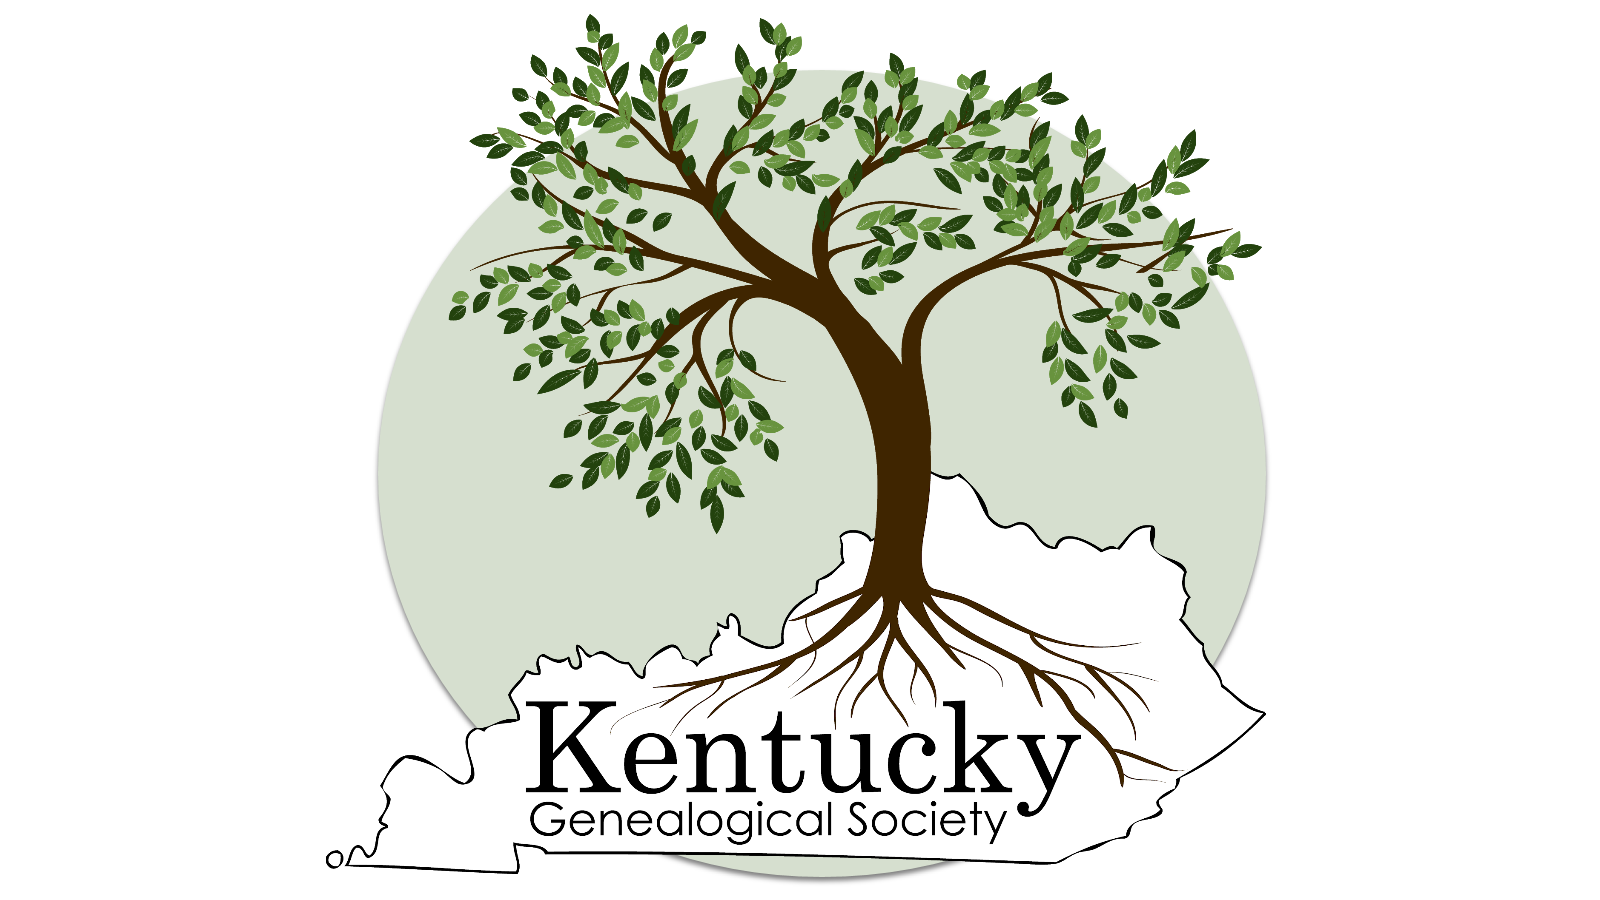 Kentucky Genealogical Society, Frankfort KY logo